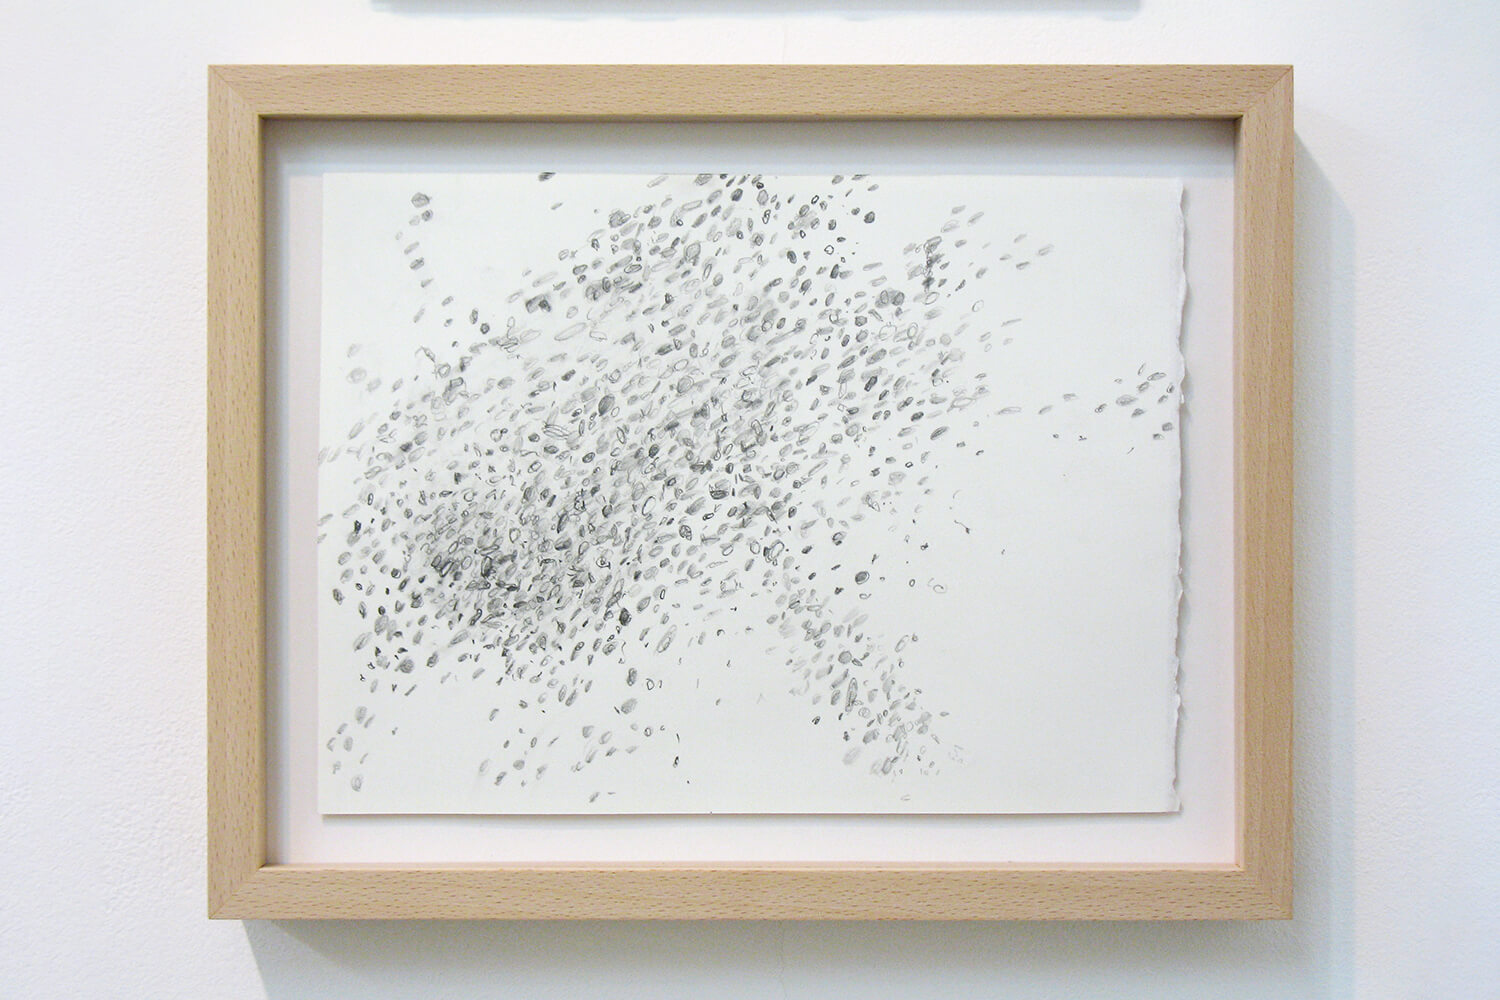 When the Dust Settles (d6)<br>Pencil on paper, 18.9 x 26 cm, 2010